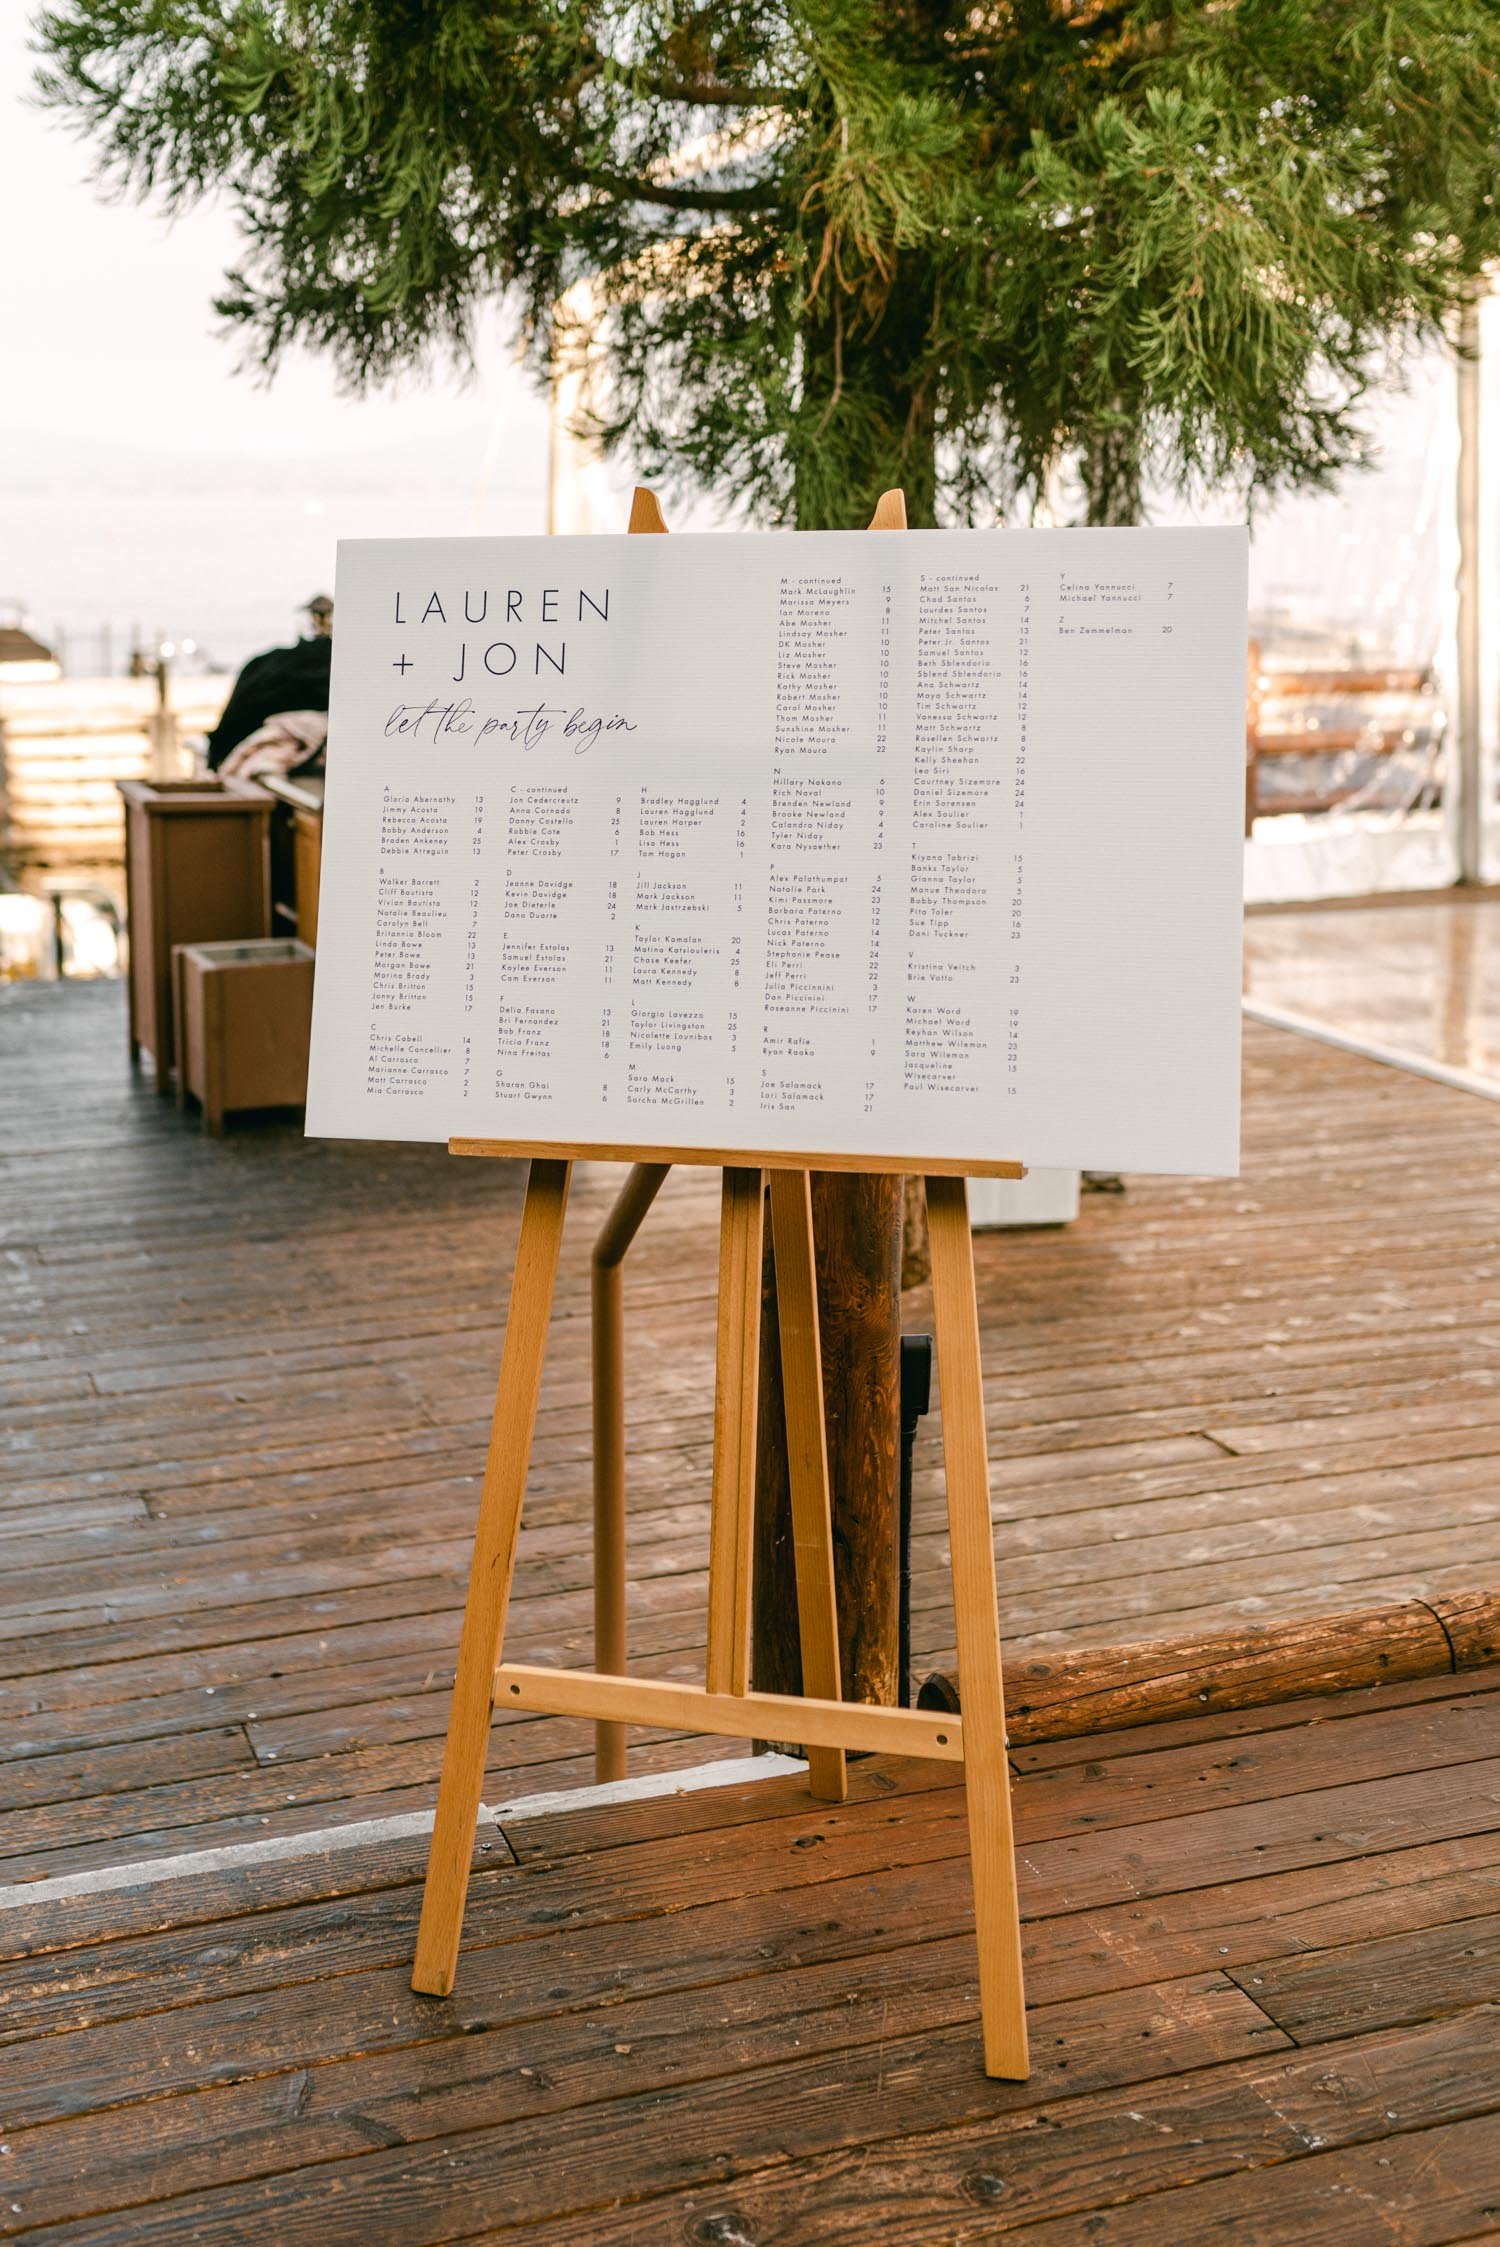 Sunnyside Tahoe Wedding, photo of wedding seating chart